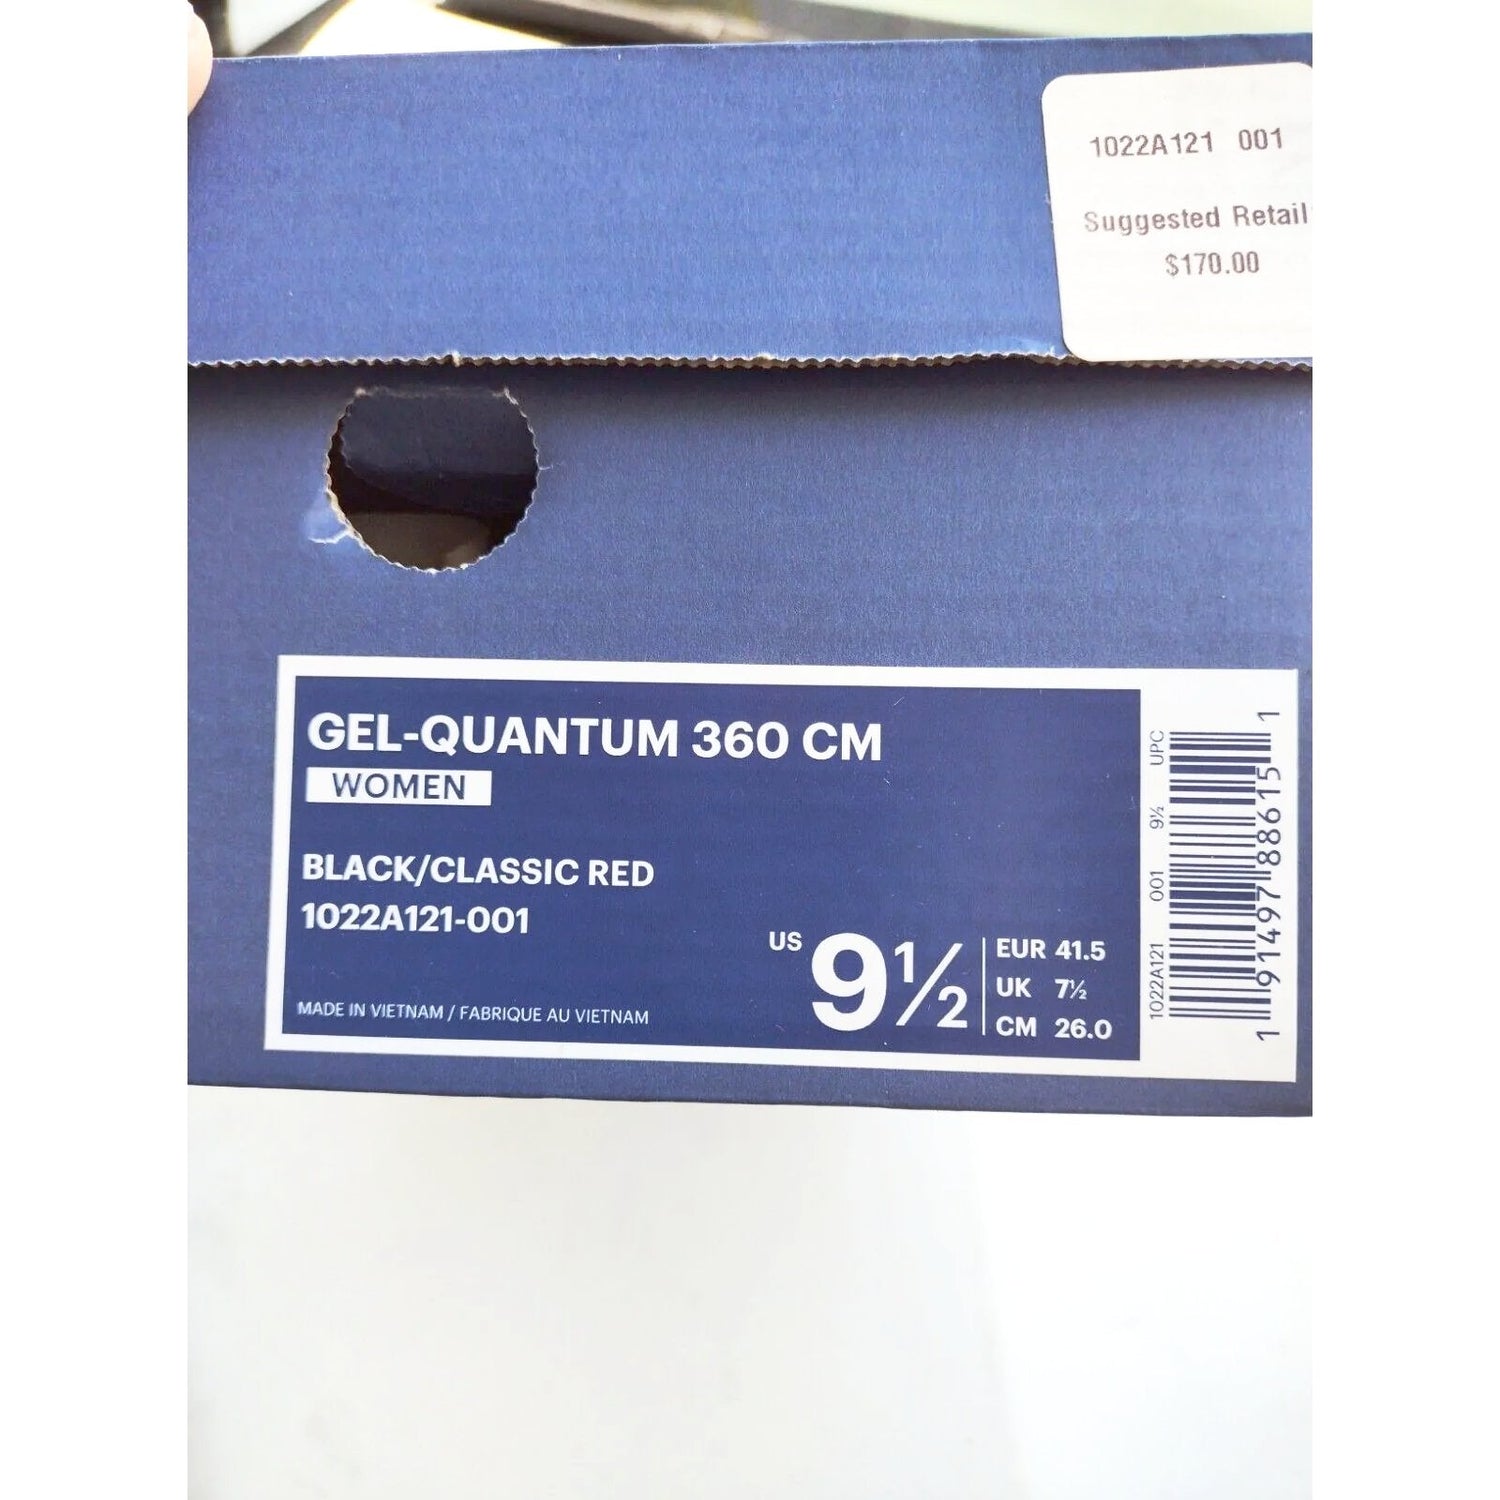 Asics women's Gel Quantum 360 CM running shoes Size 9.5 us - Classic Fashion Deals